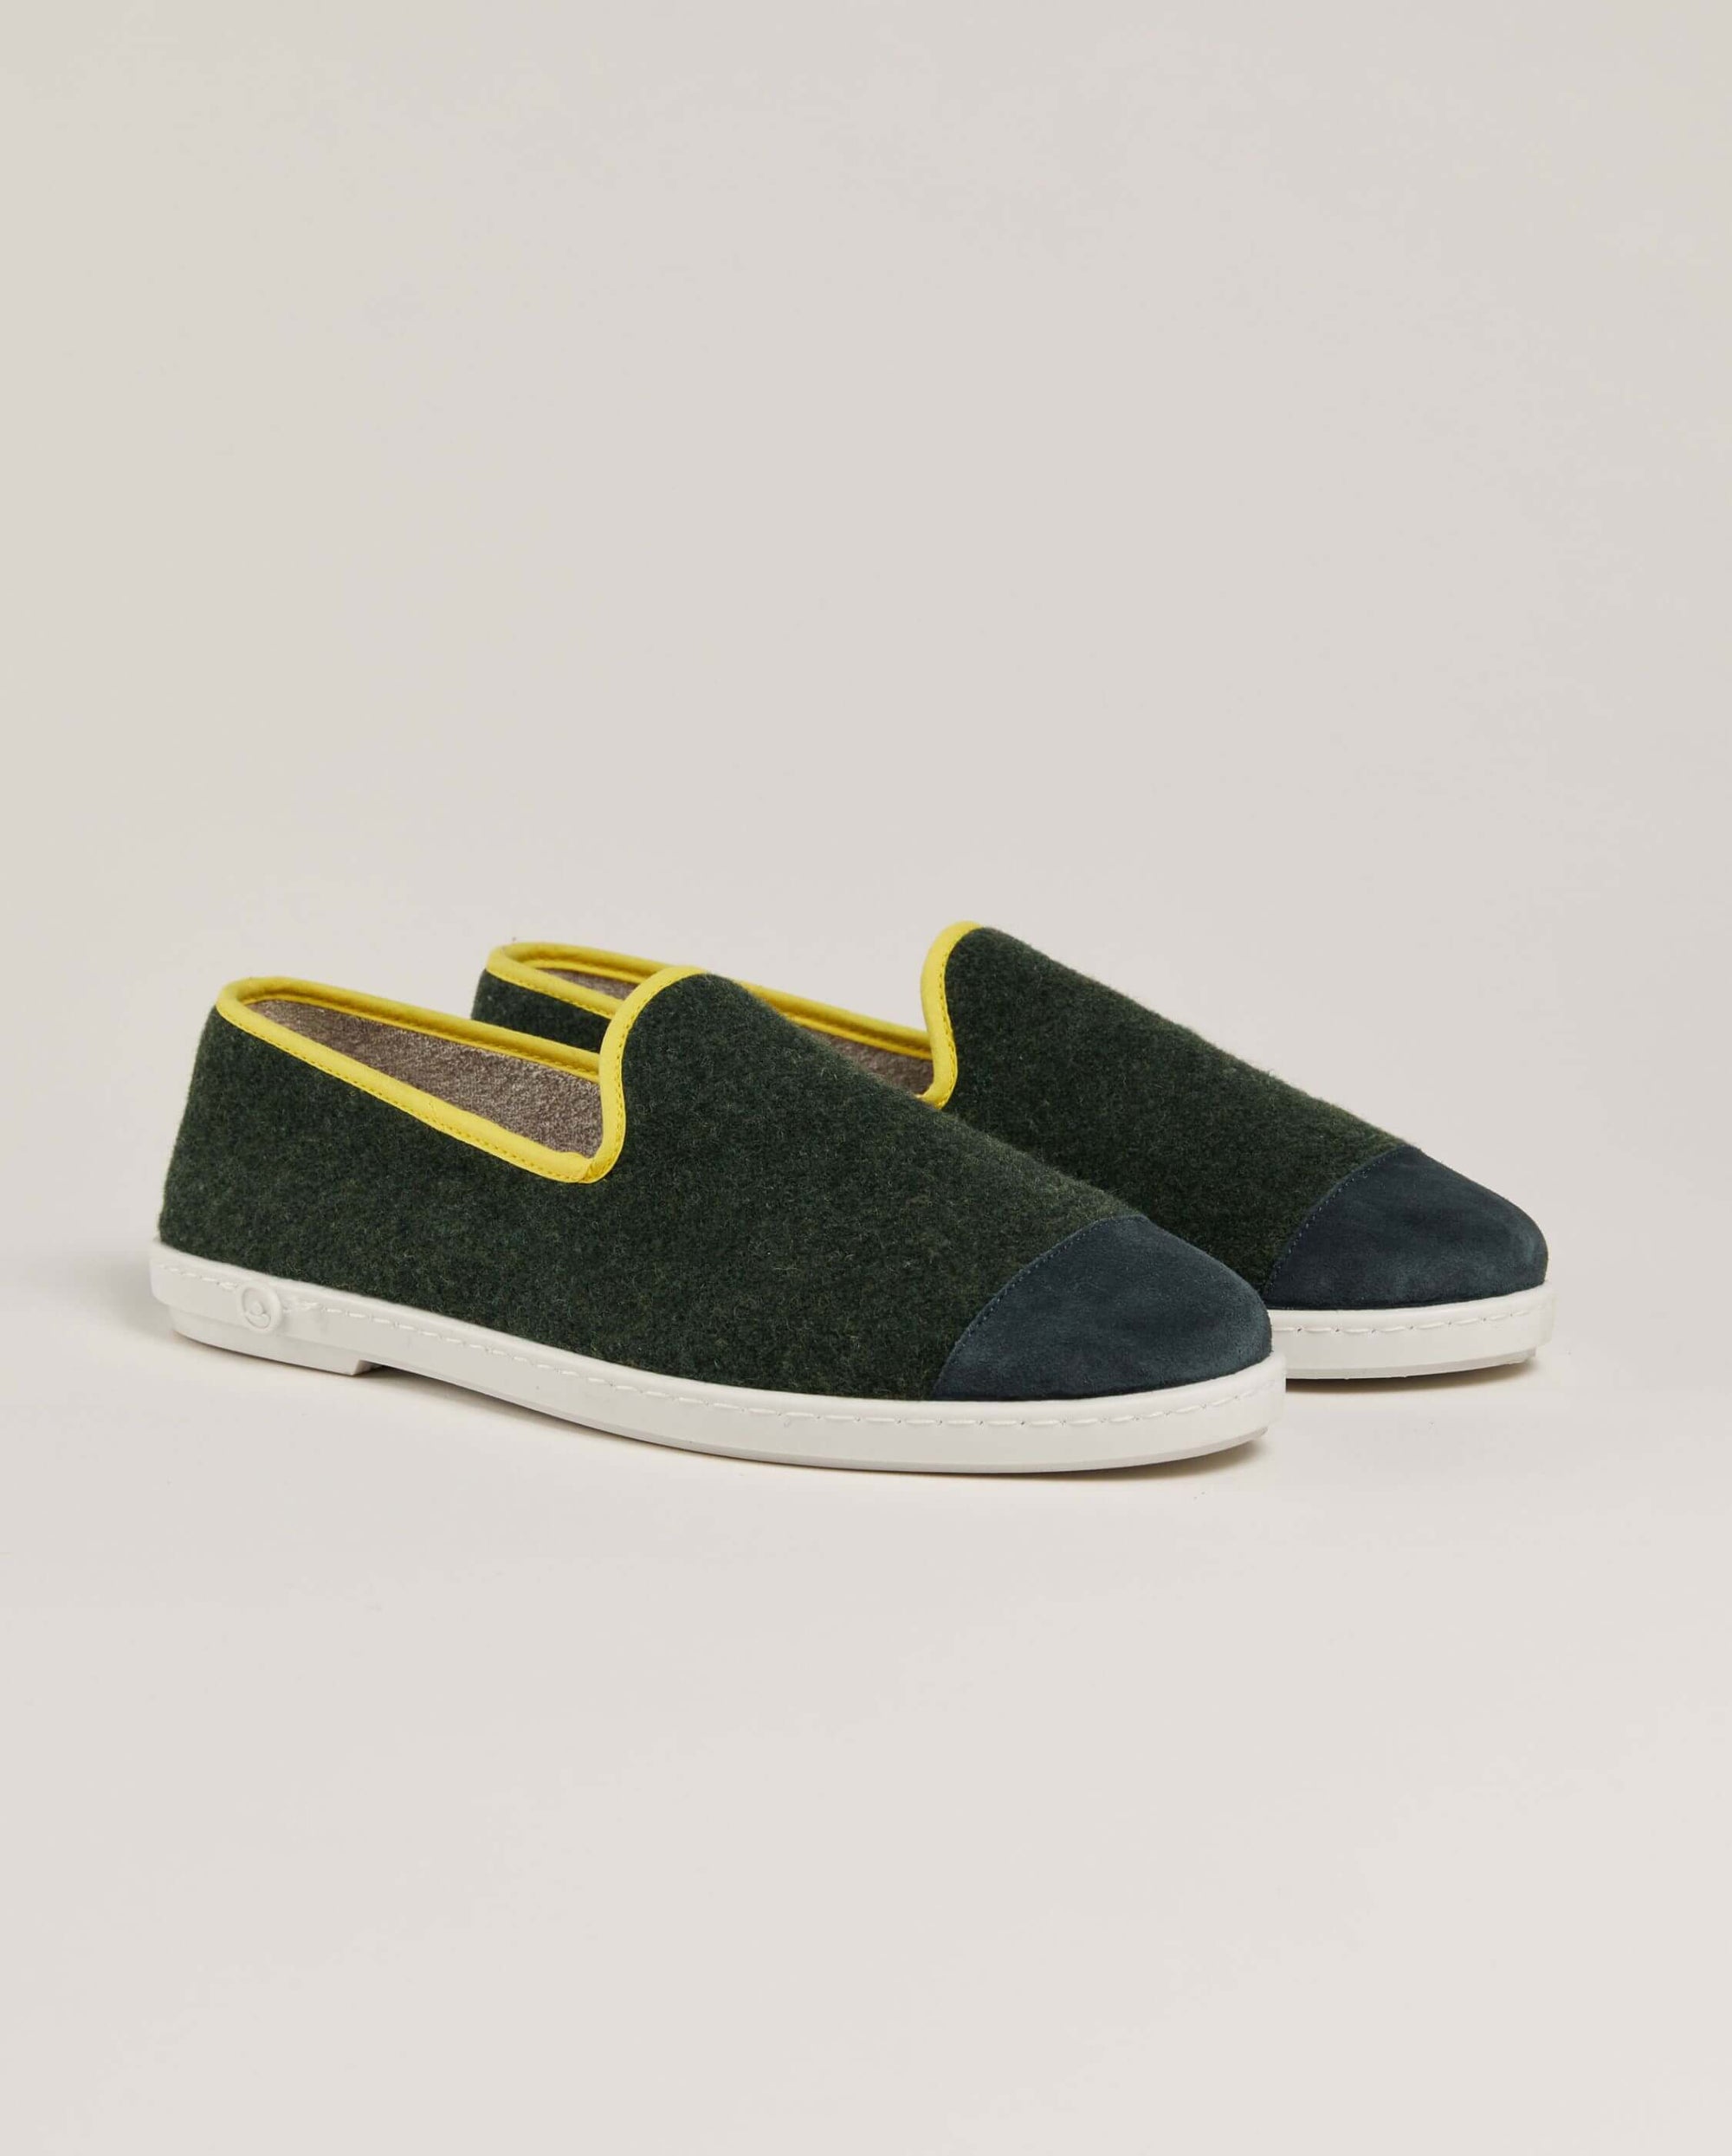 Men's wool slipper, green yellow